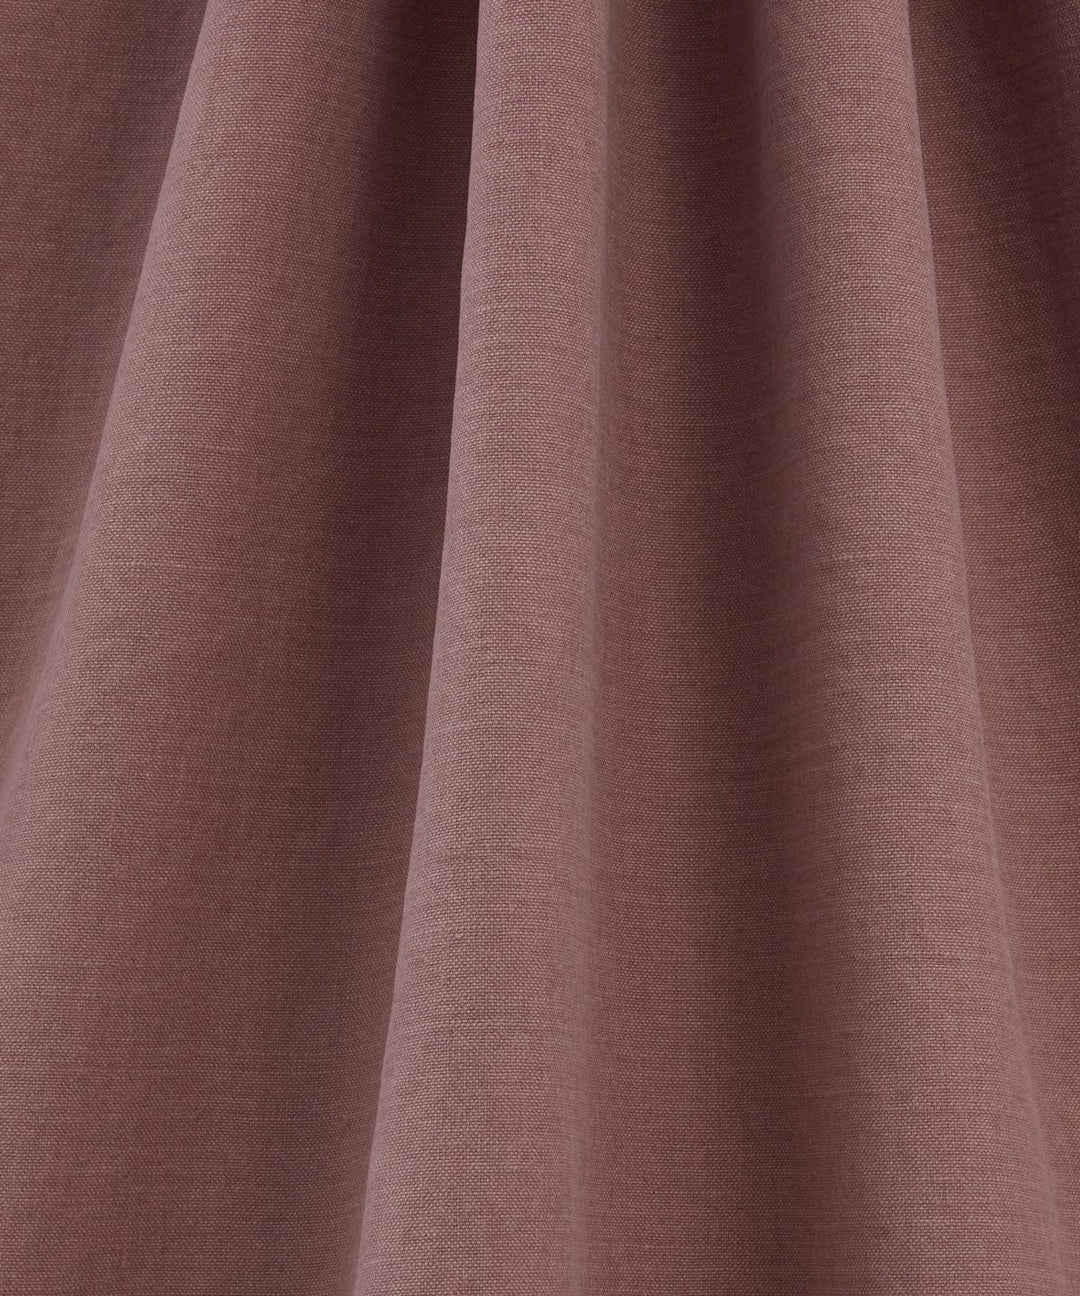 liberty-fabrics-interiors-emberton-linen-plain-sloe-purple-dusty-pink